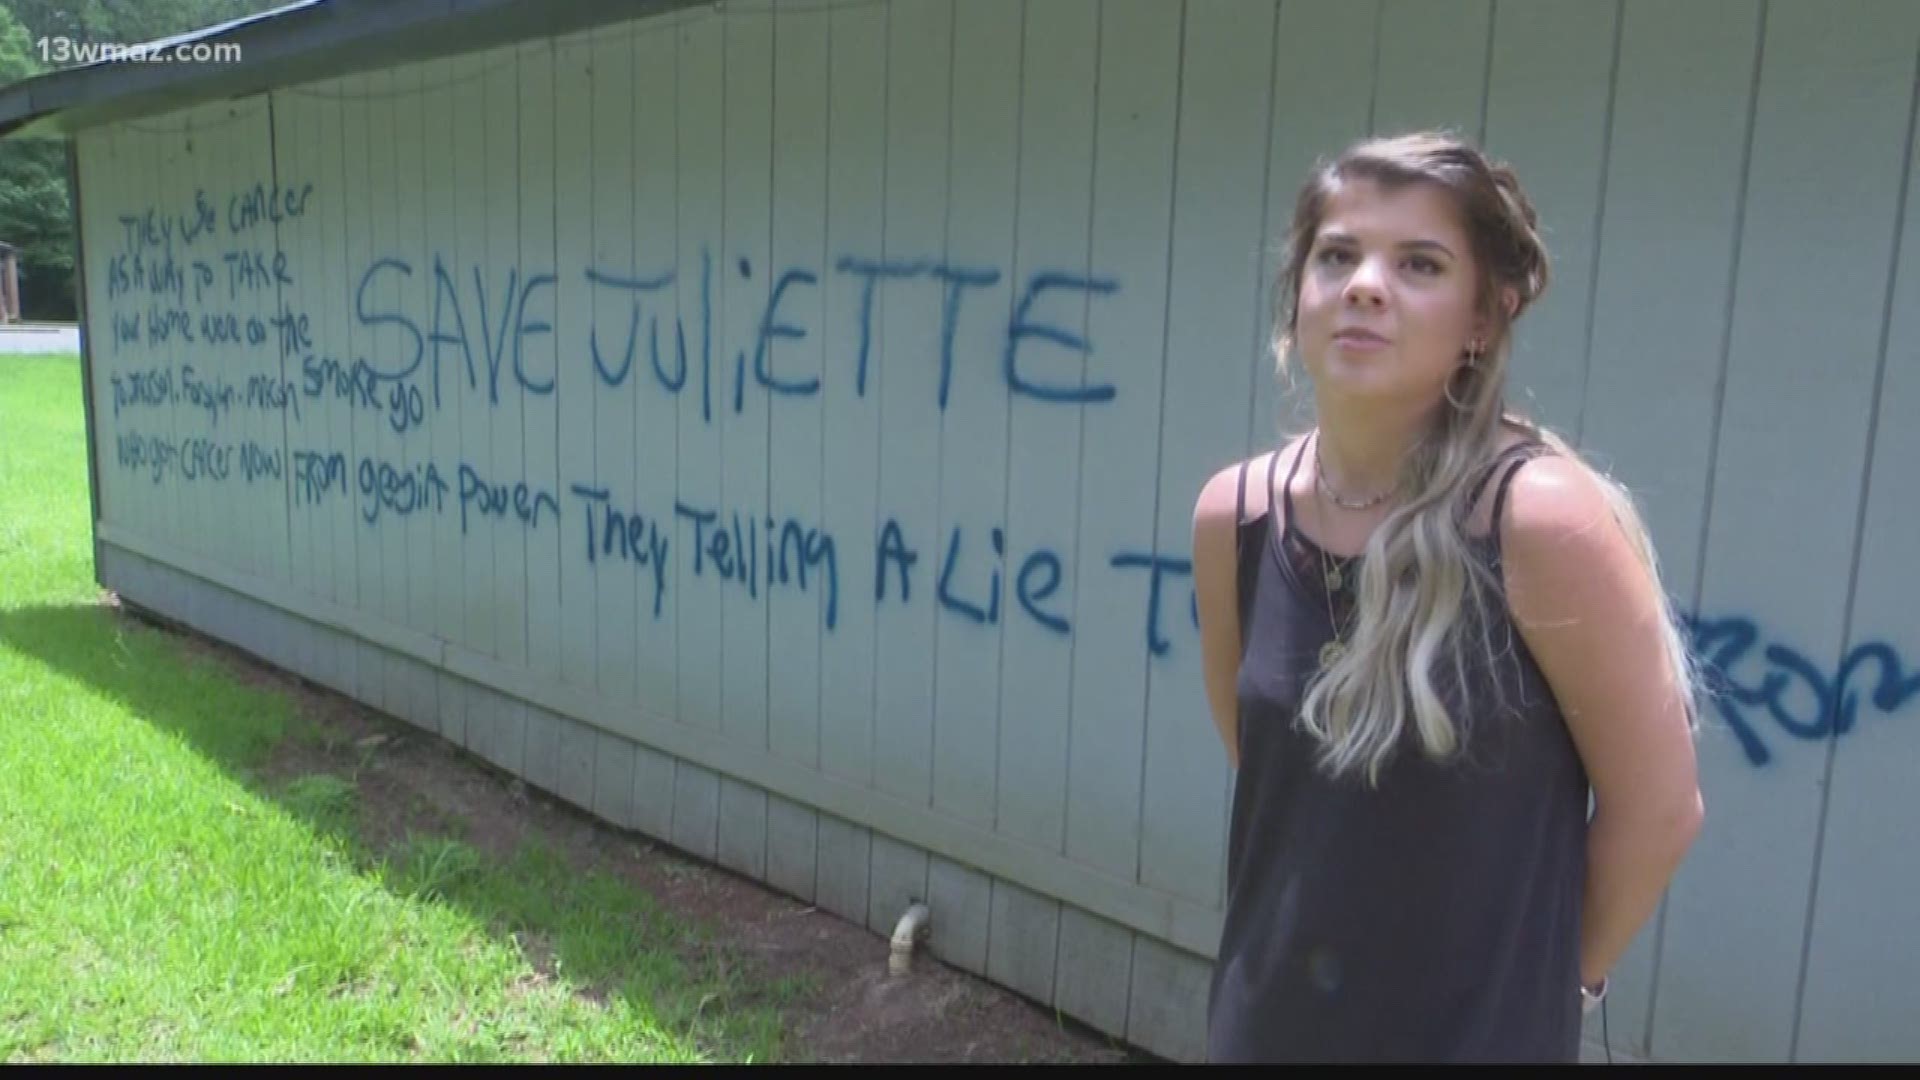 Vandalism calls to 'save Juliette' 